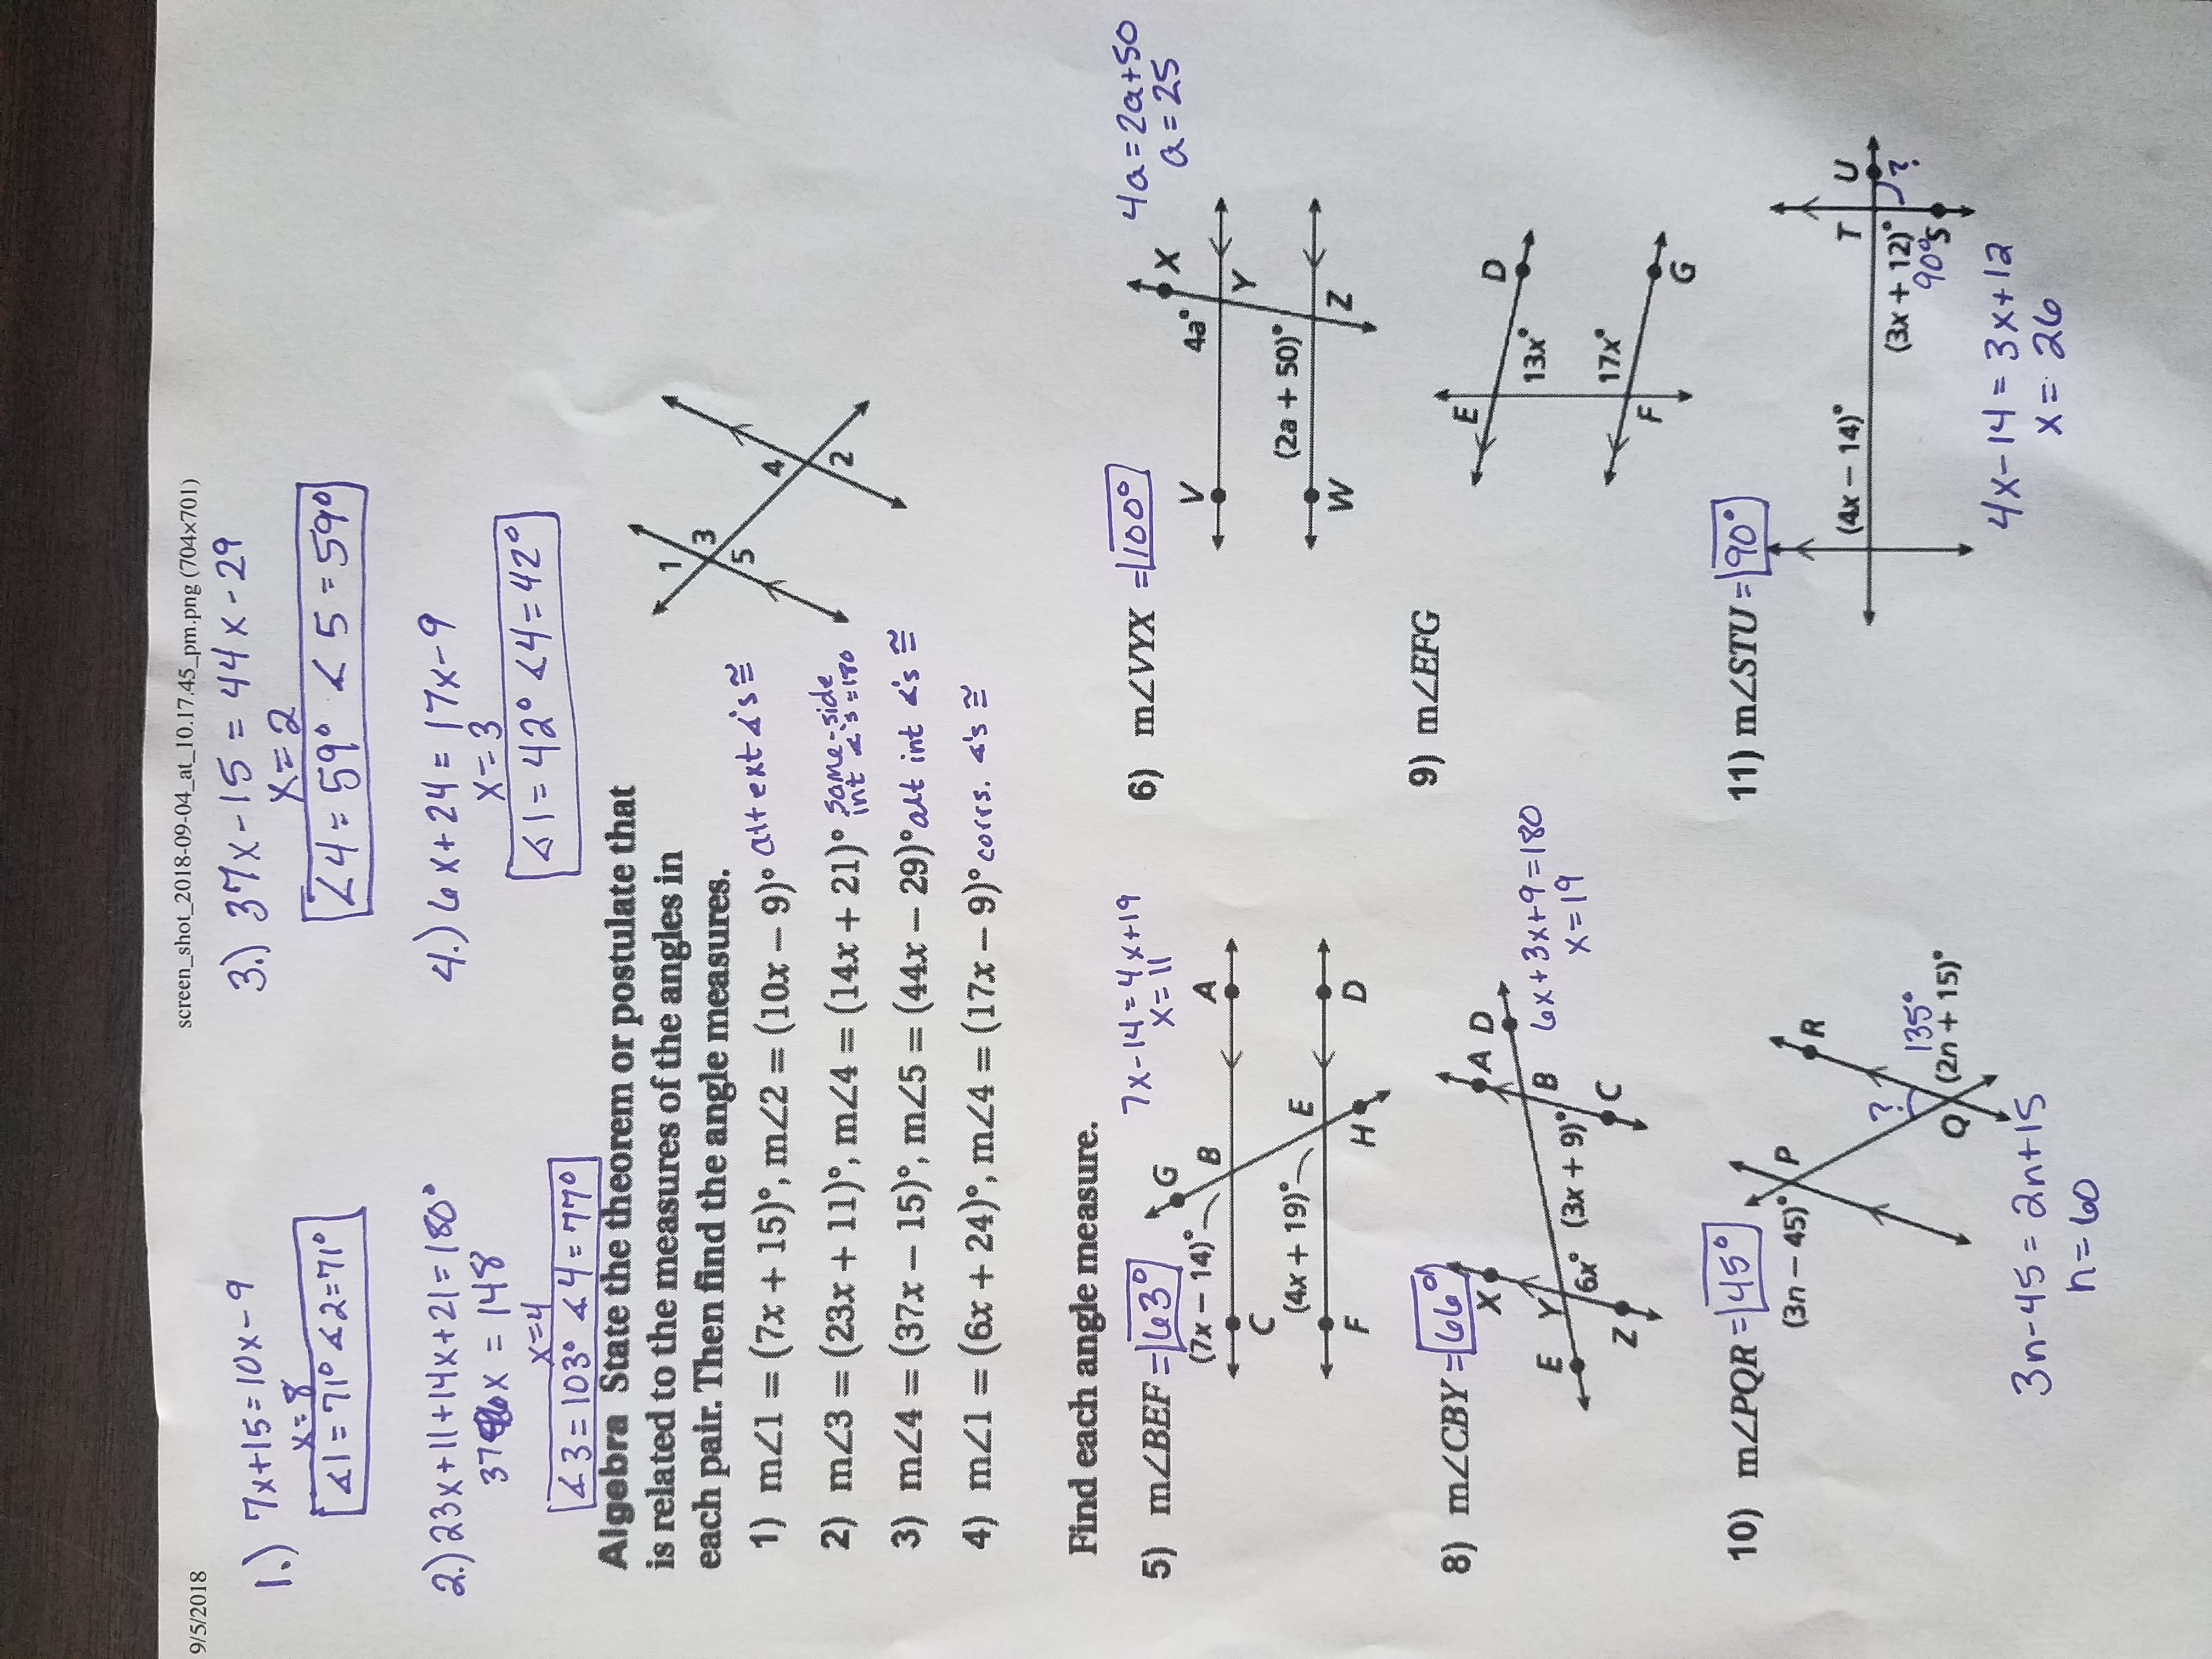 unit 3 homework 2 geometry answers